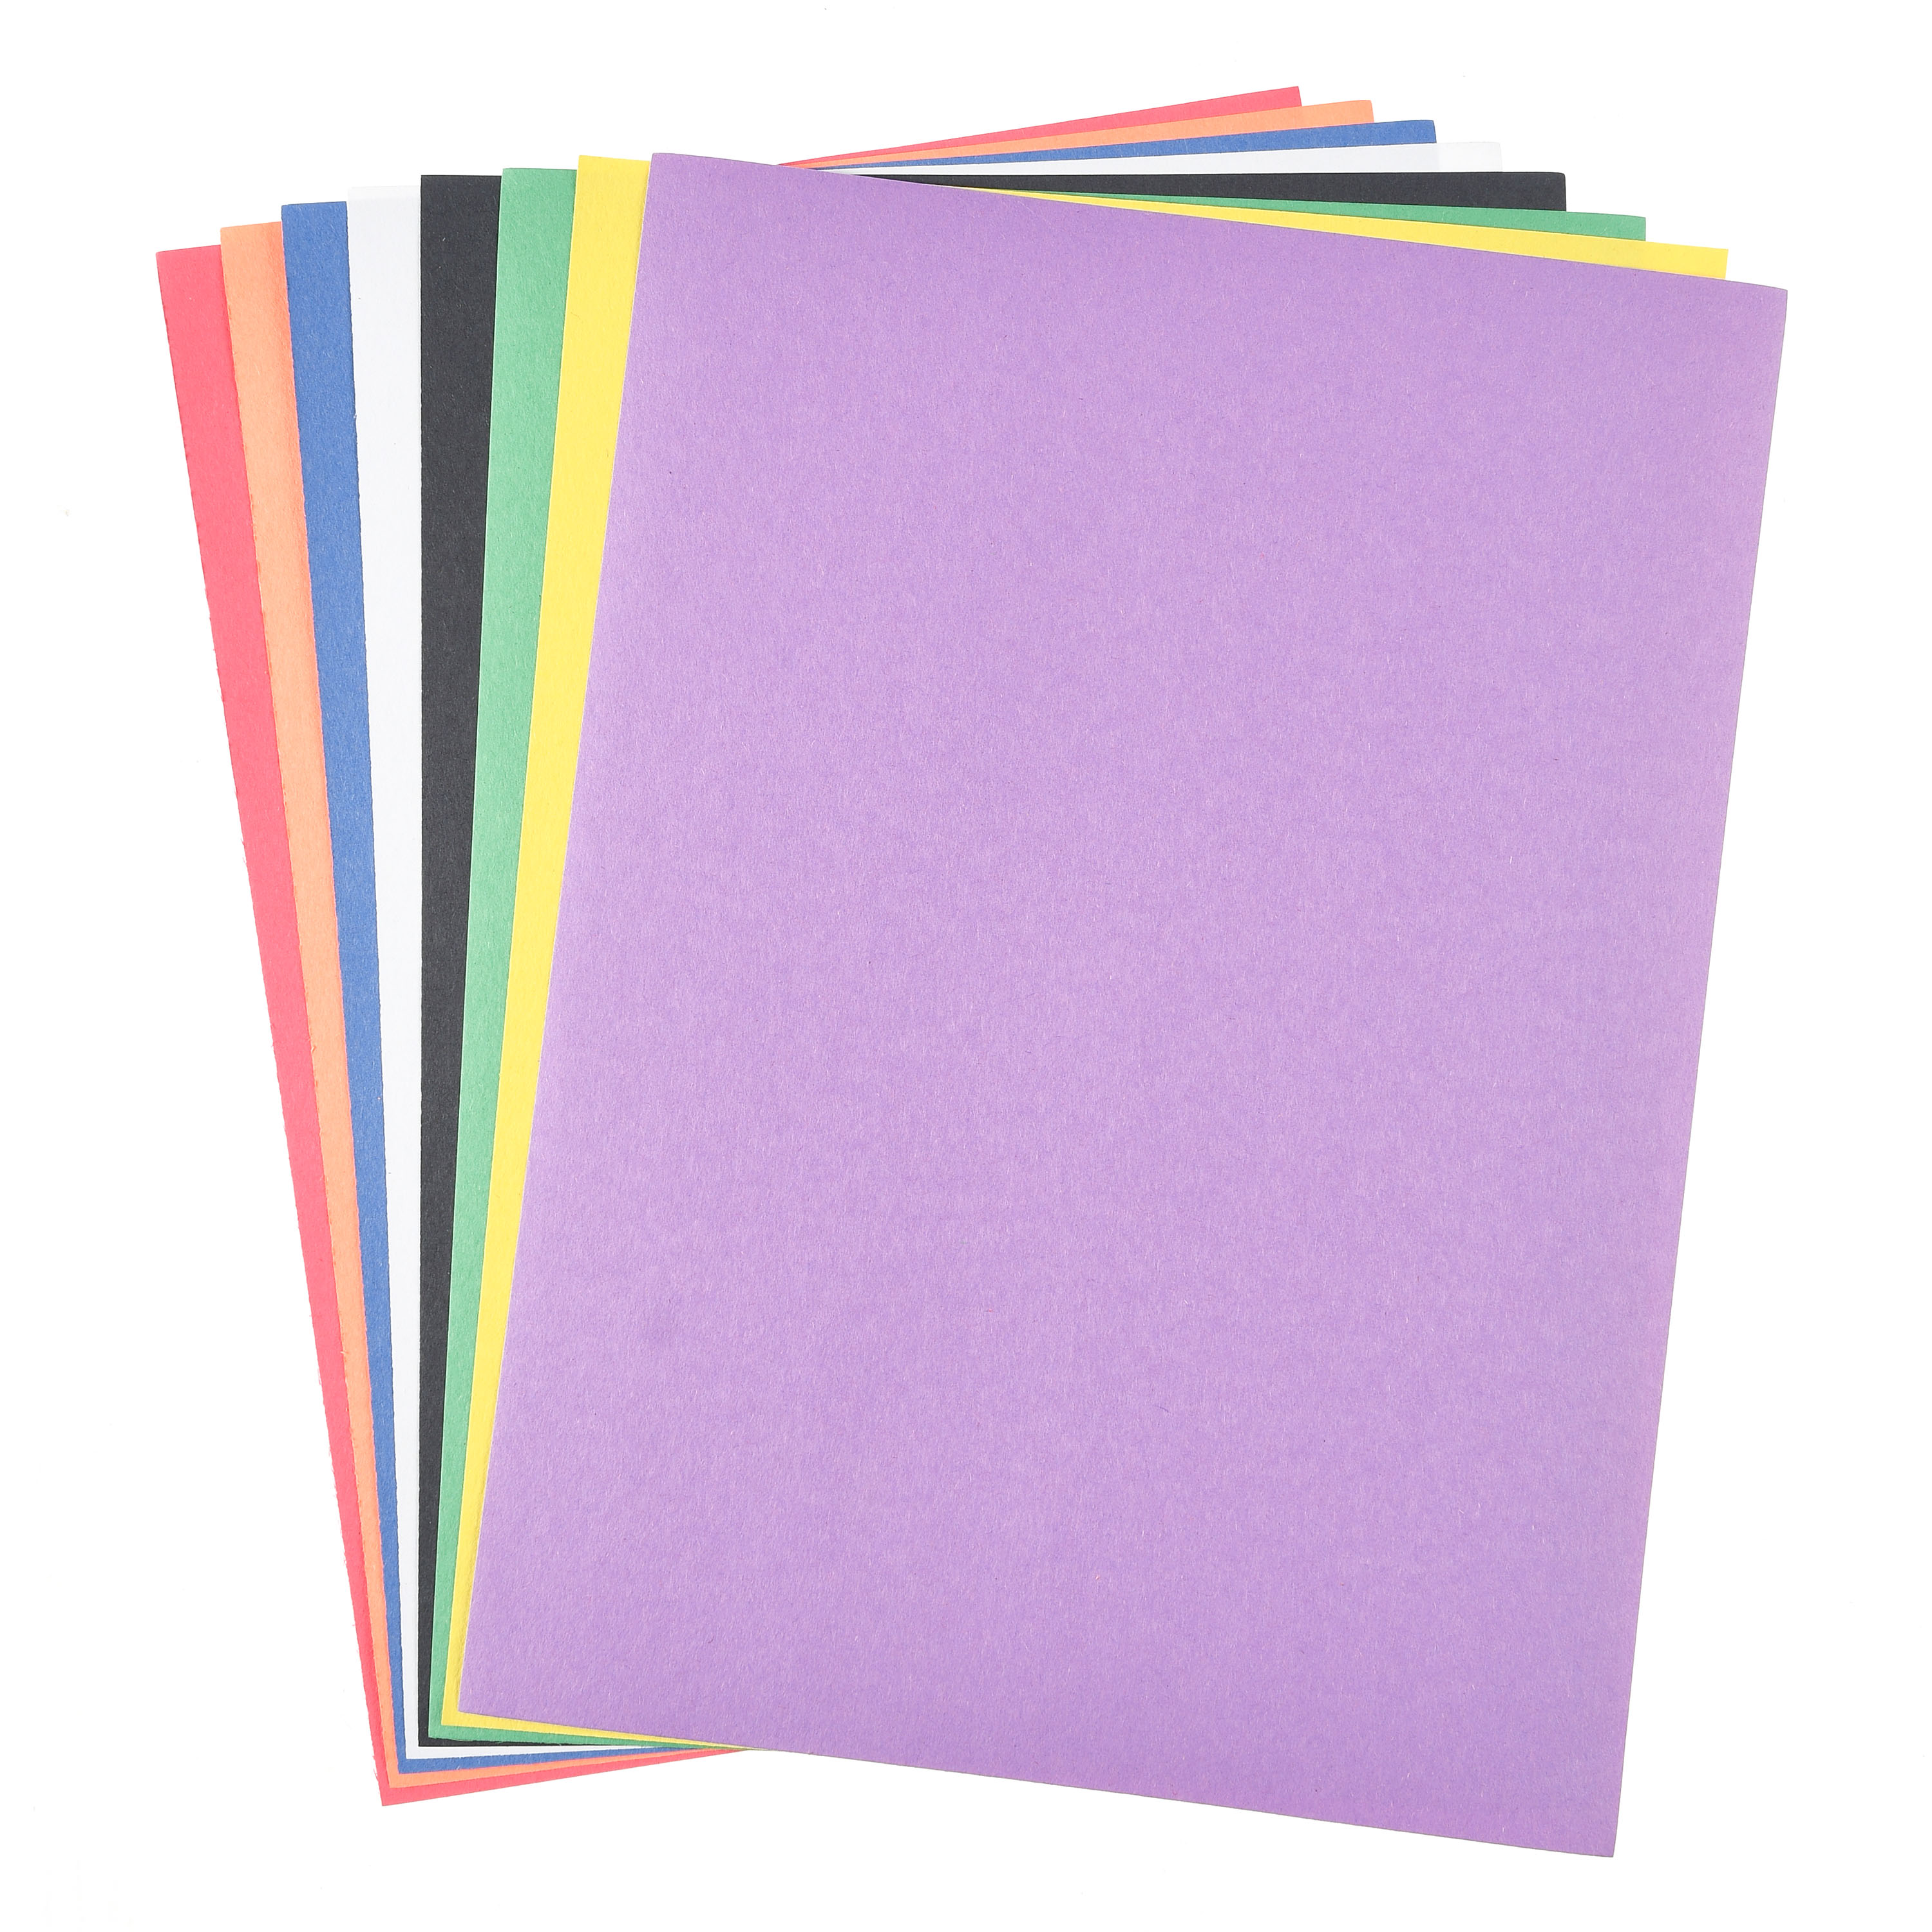 Spark. create. Imagine. Heavyweight Construction Paper, Multi Color, 500 Count